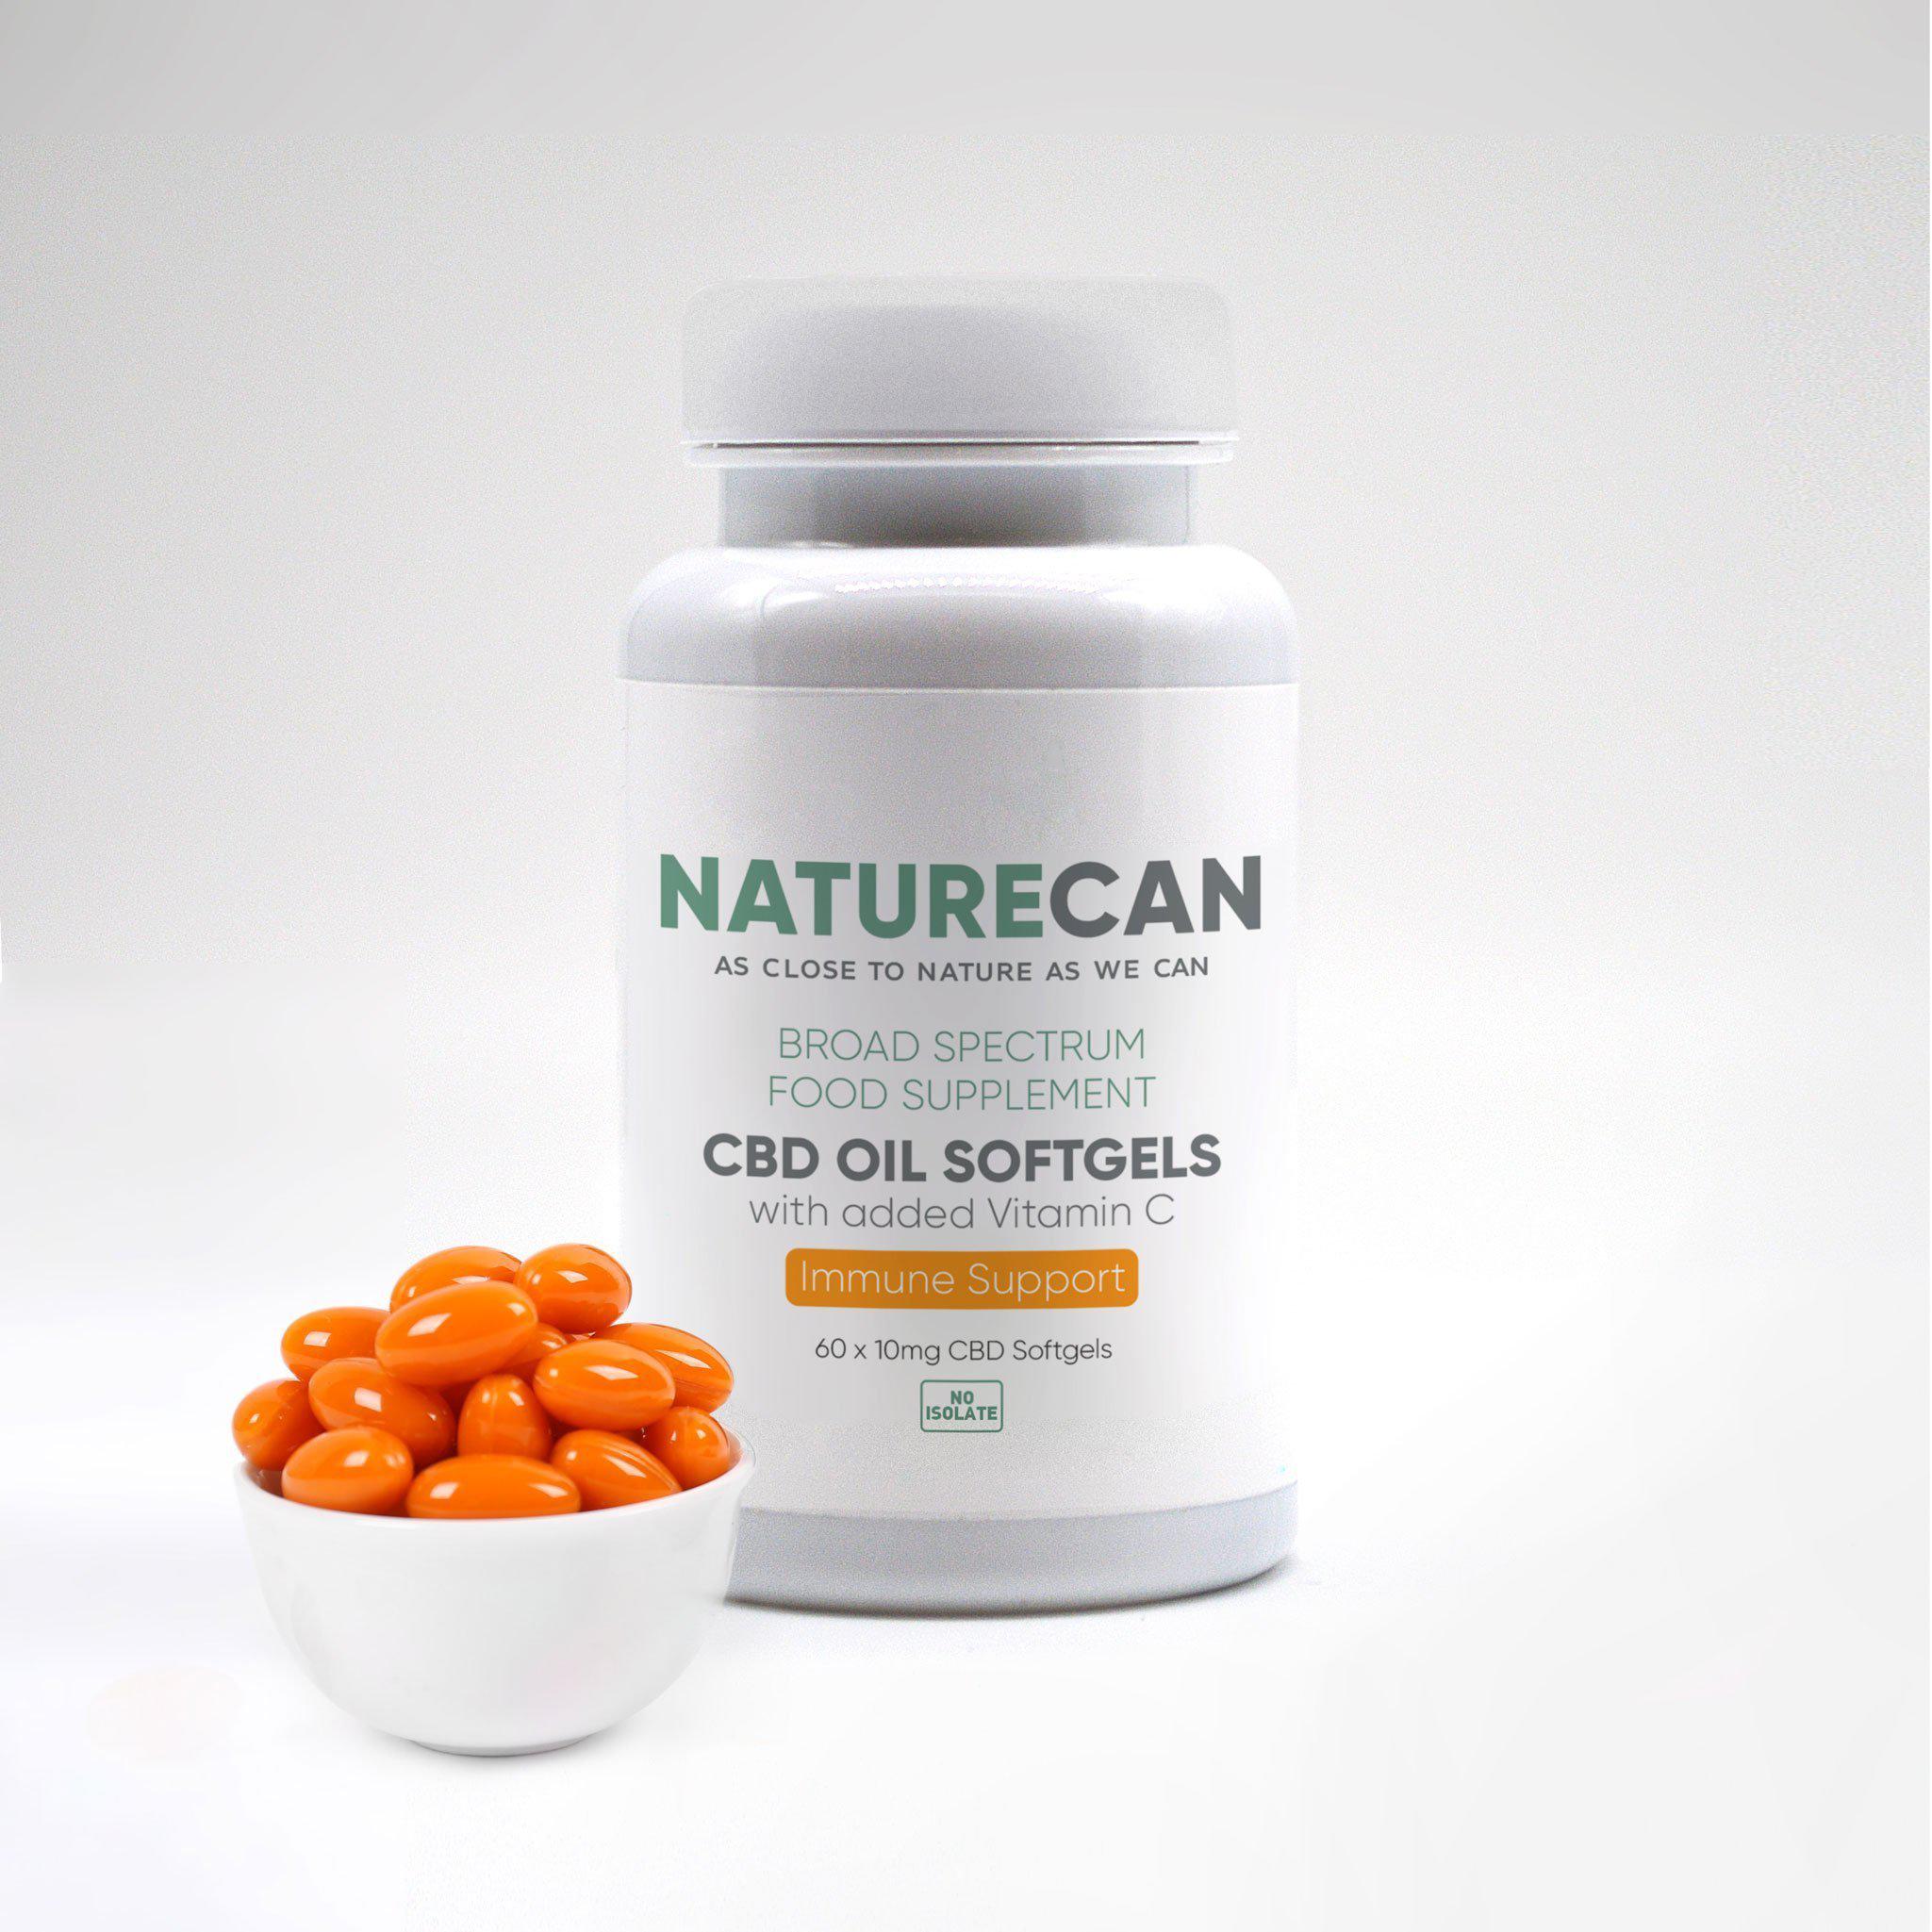 60 CBD softgels with added vitamin C